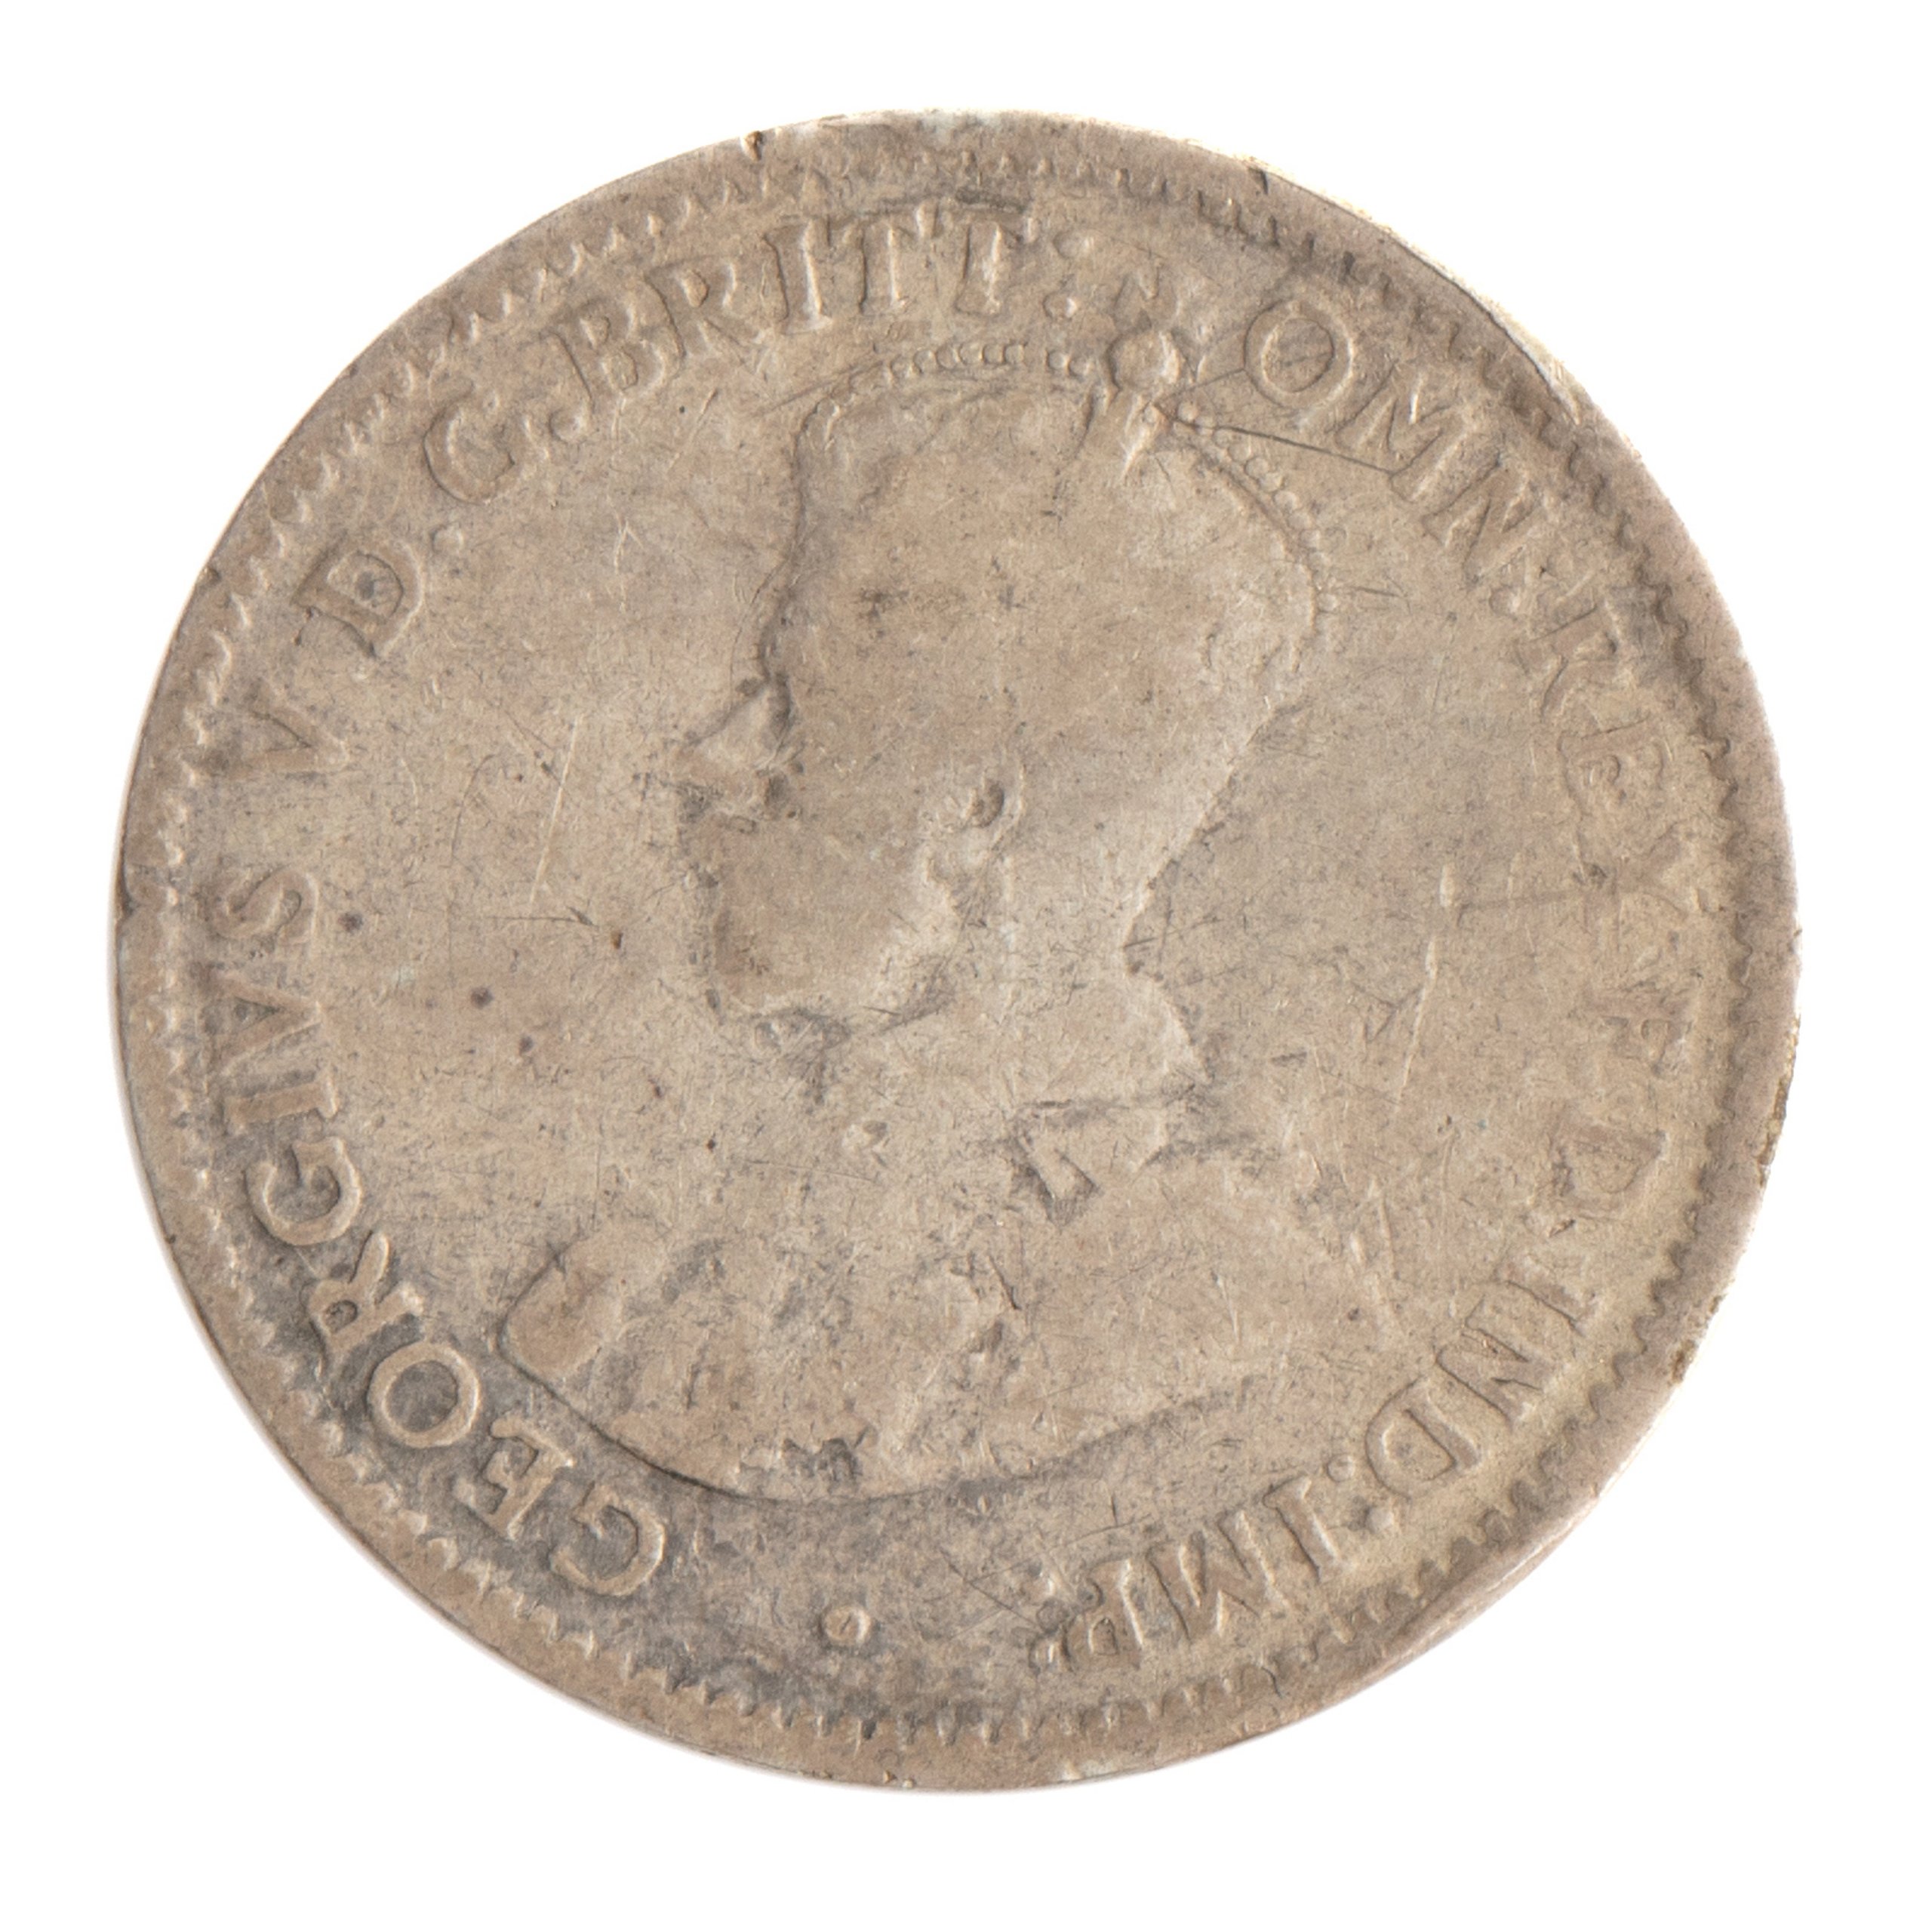 Australian Threepence coin